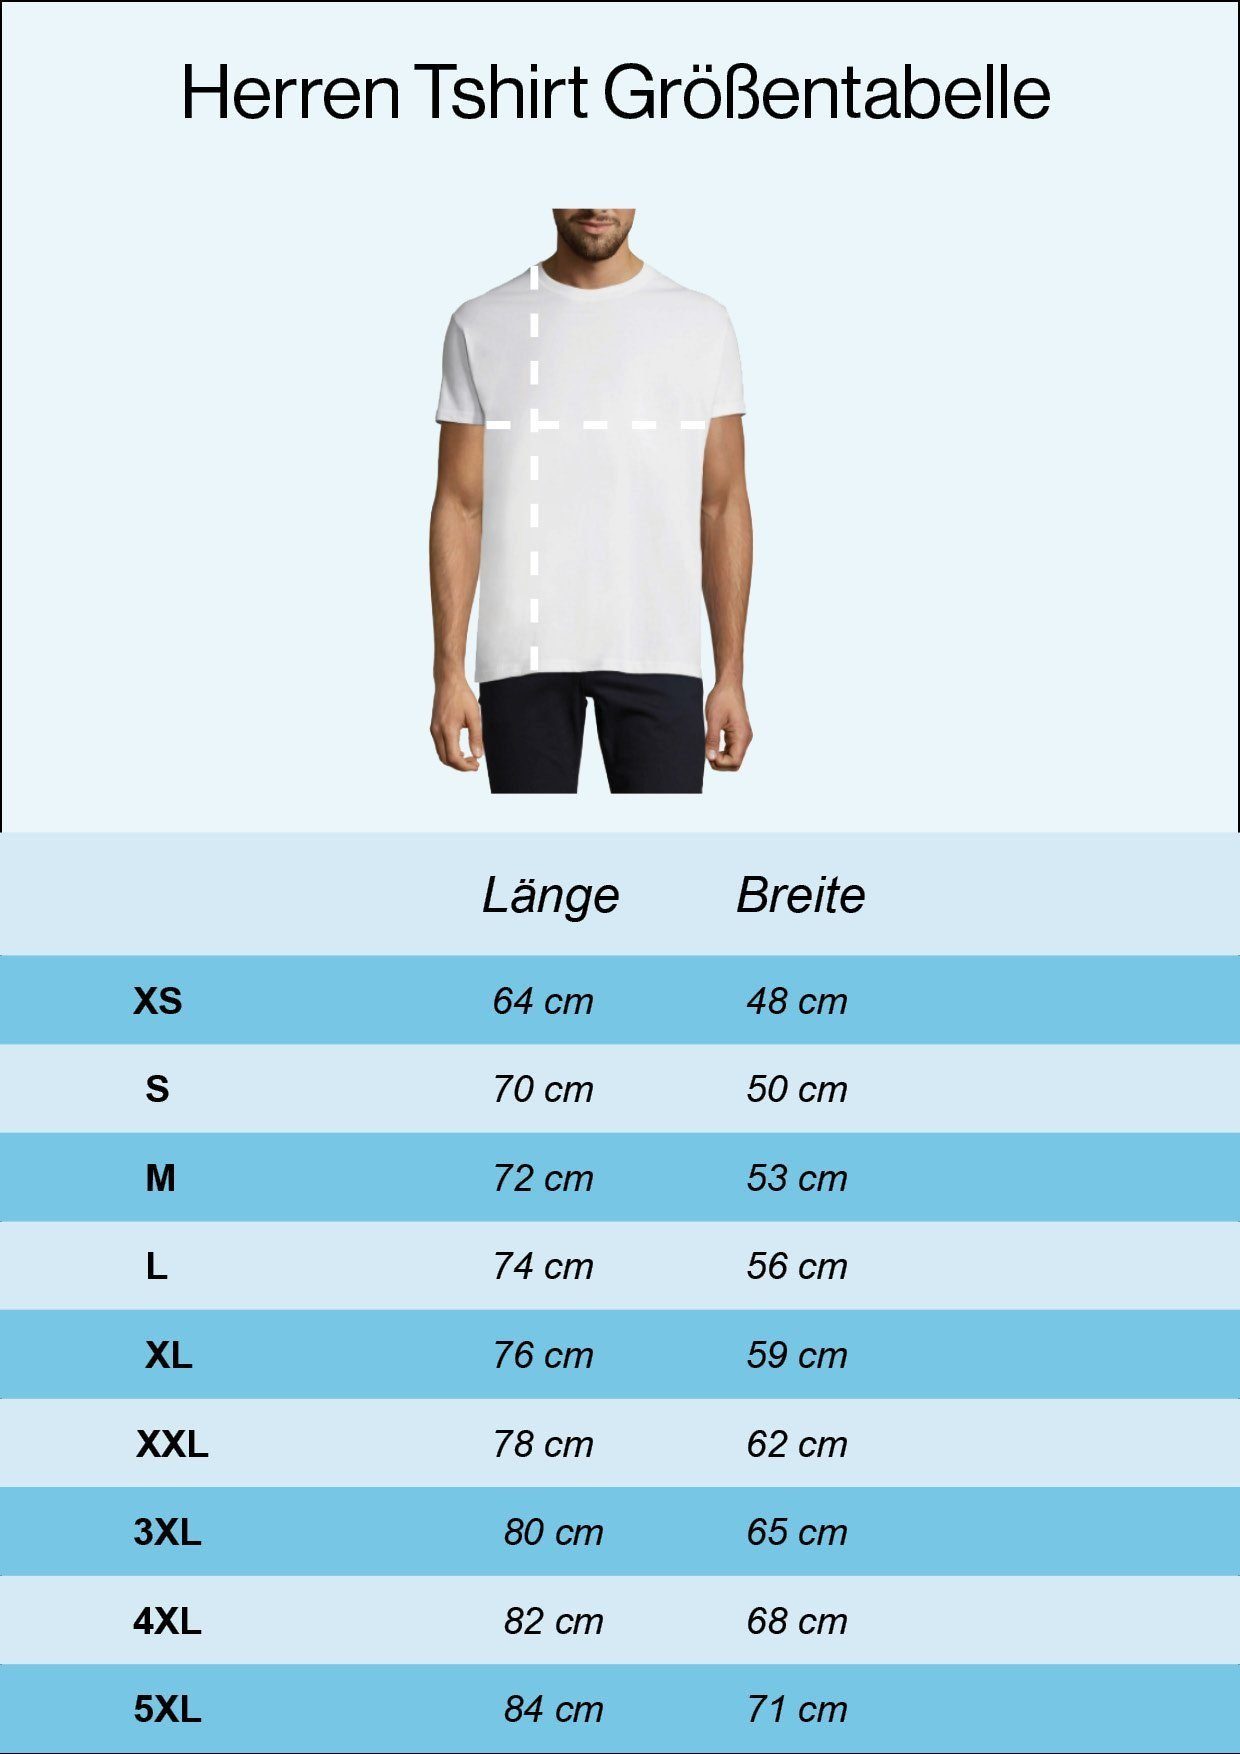 Youth Designz T-Shirt mit Herren Alf Frontprint T-Shirt Grau trendigem